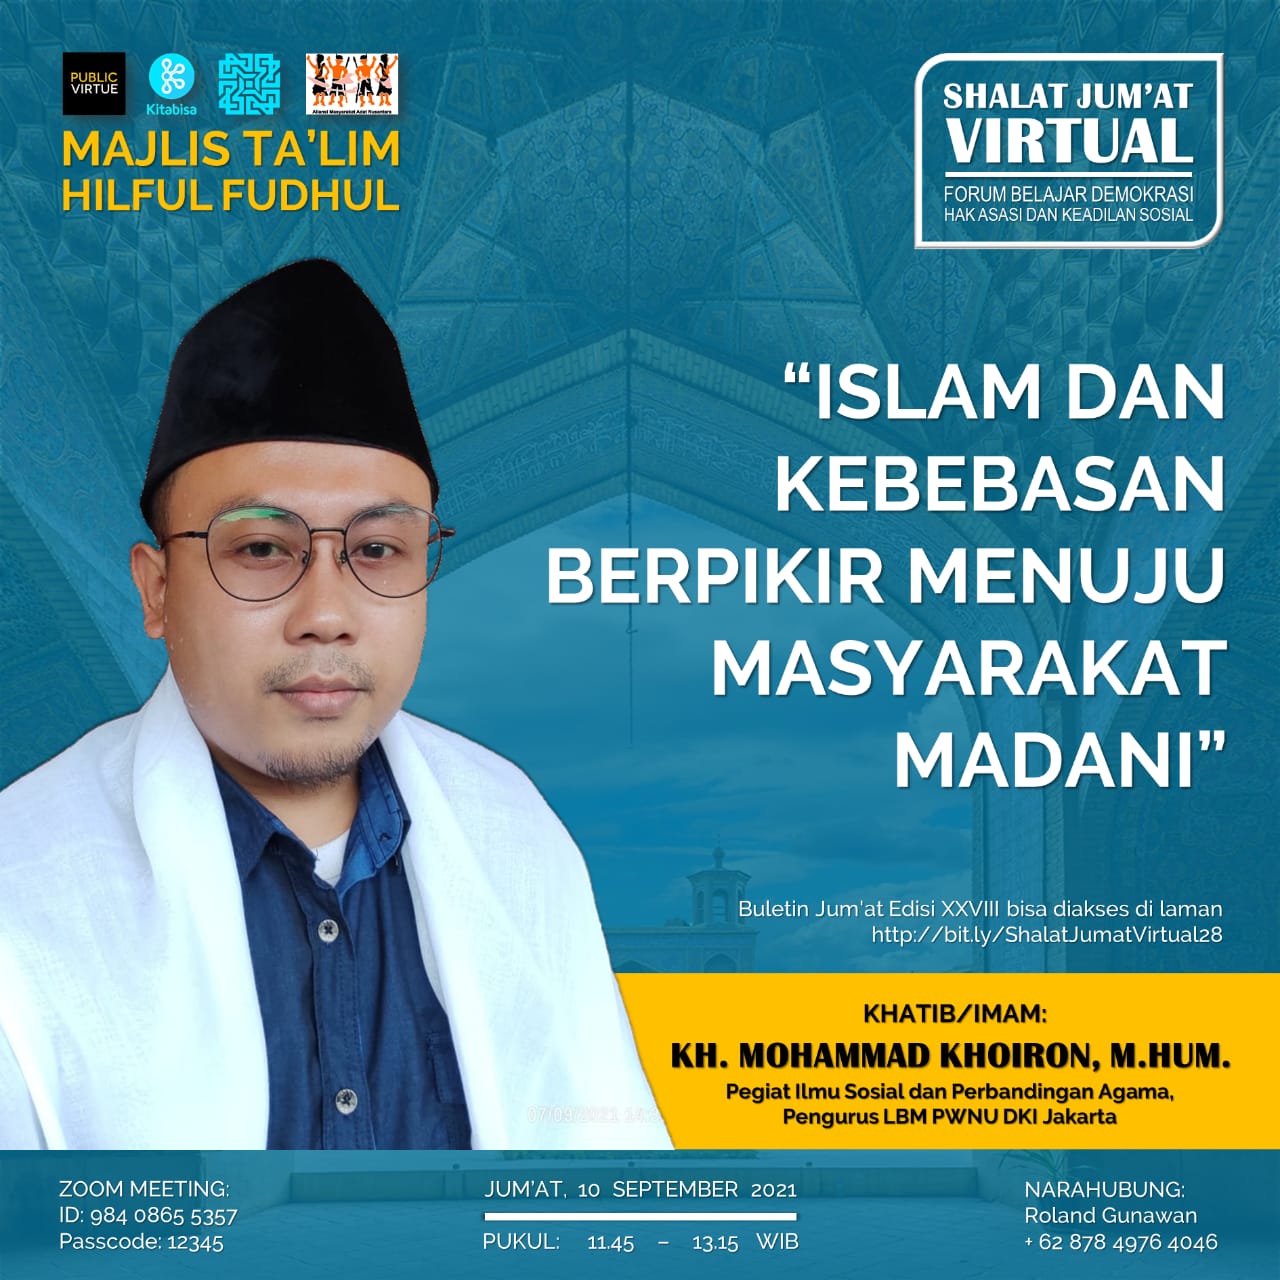 Mohammad Khoiron M.Hum, Pegiat Ilmu Sosial dan Perbandingan Agama sekaligus Pengurus LBM PWNU DKI Jakarta